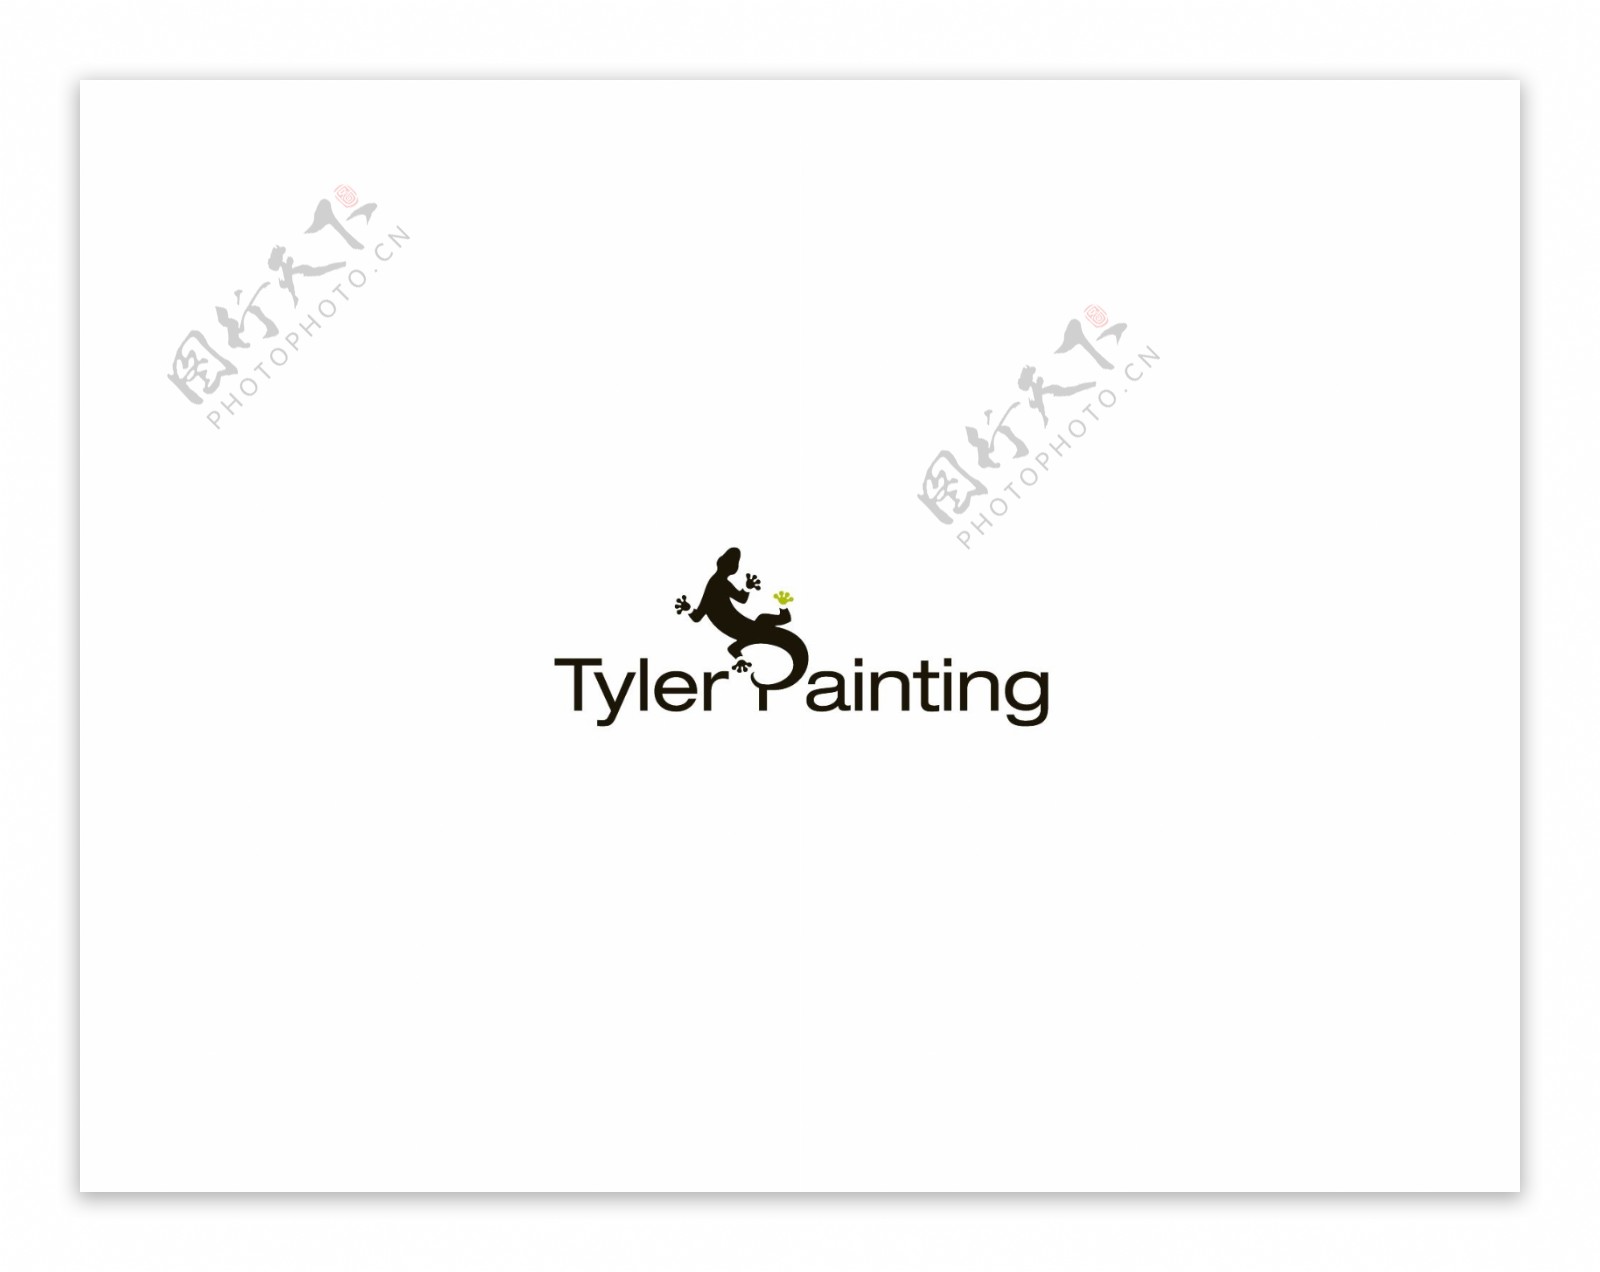 TylerPaintinglogo设计欣赏TylerPainting服务公司LOGO下载标志设计欣赏